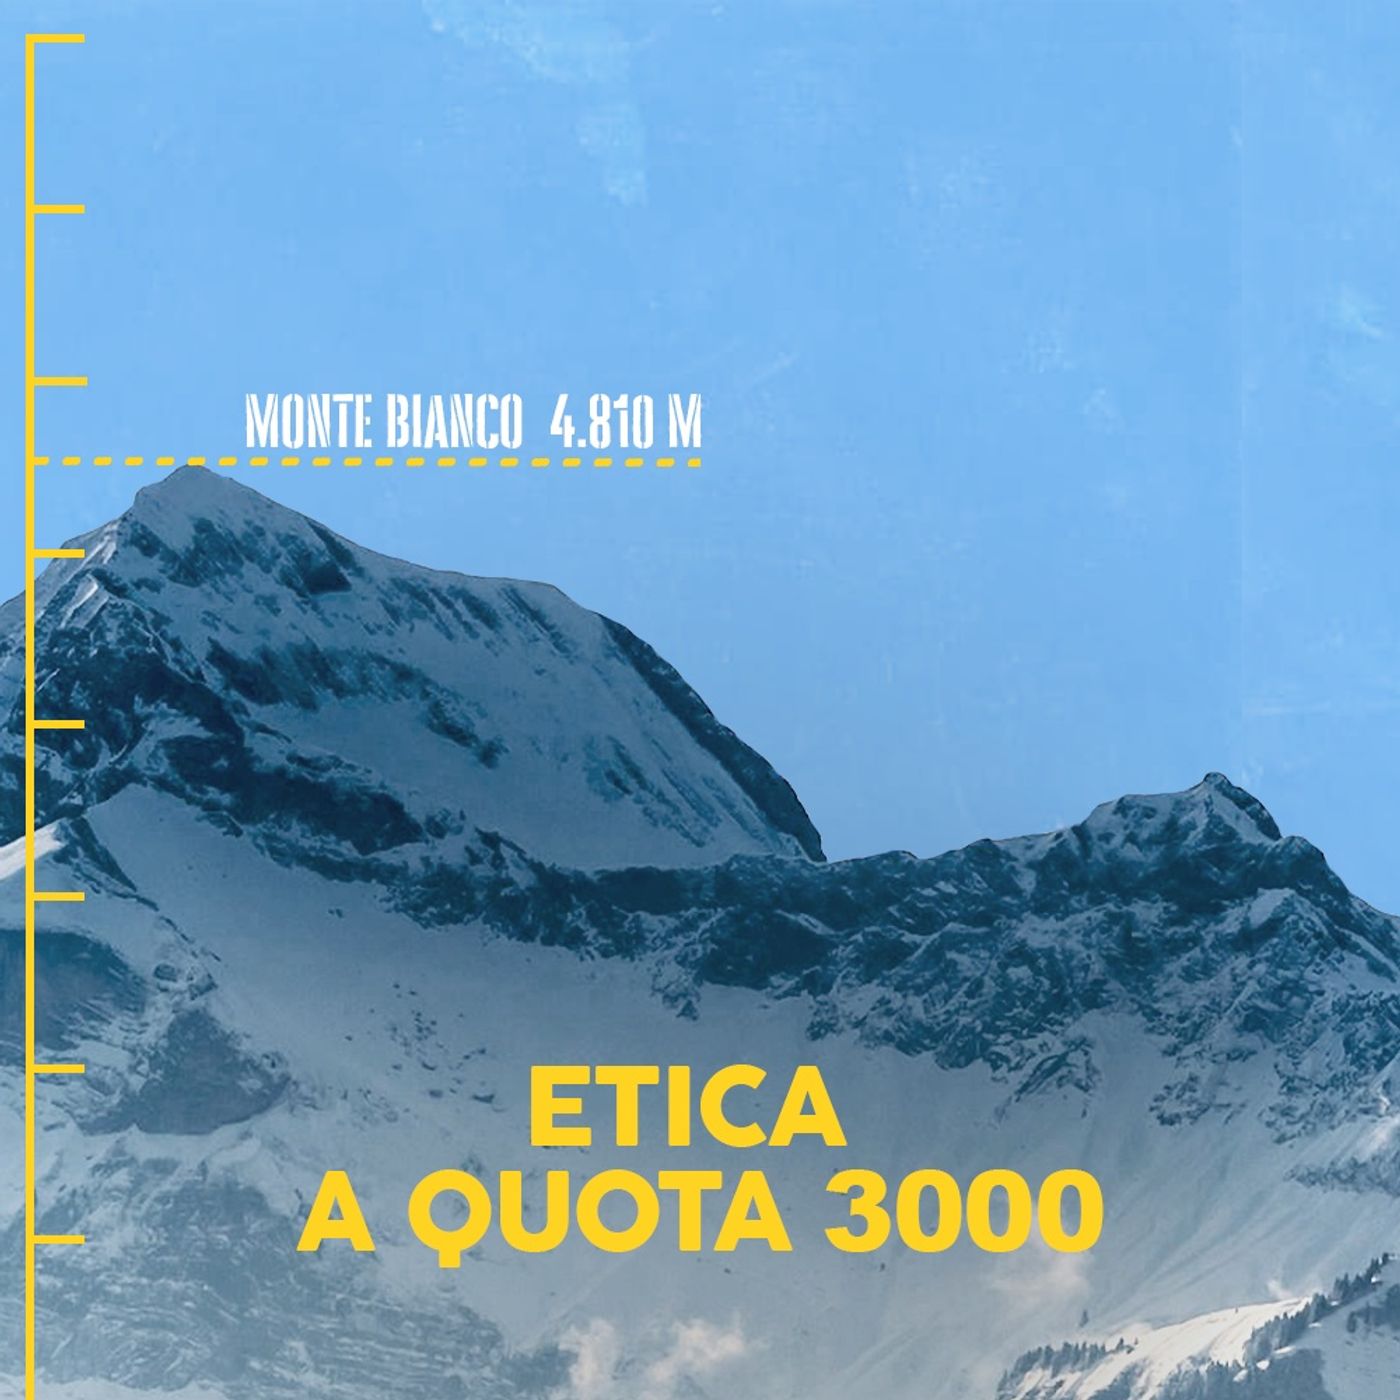 Etica a quota 3000